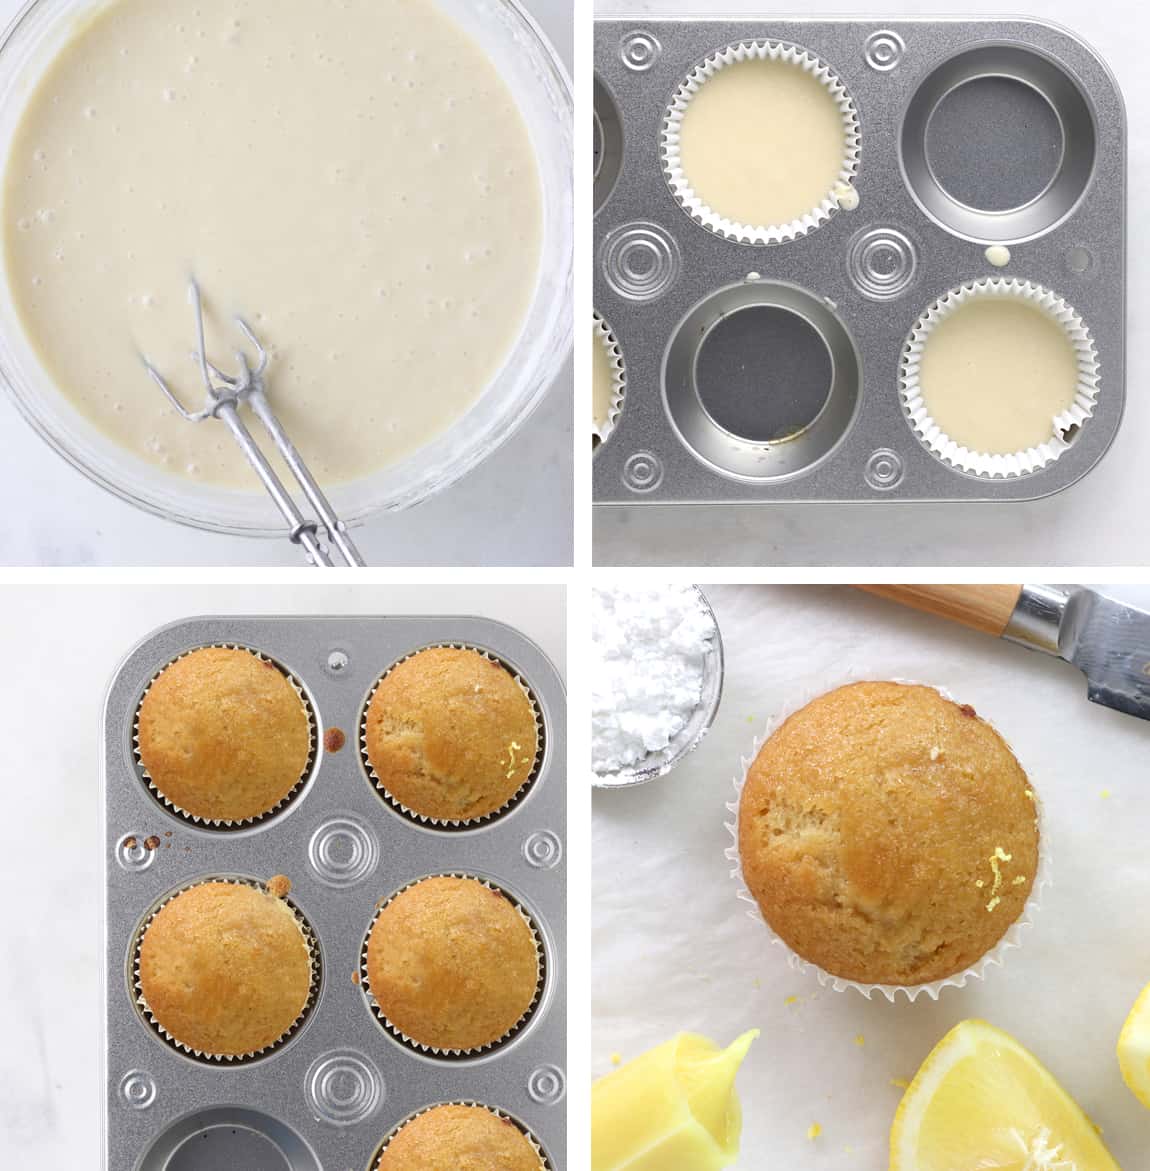 Steps to make Lemon Cupcakes